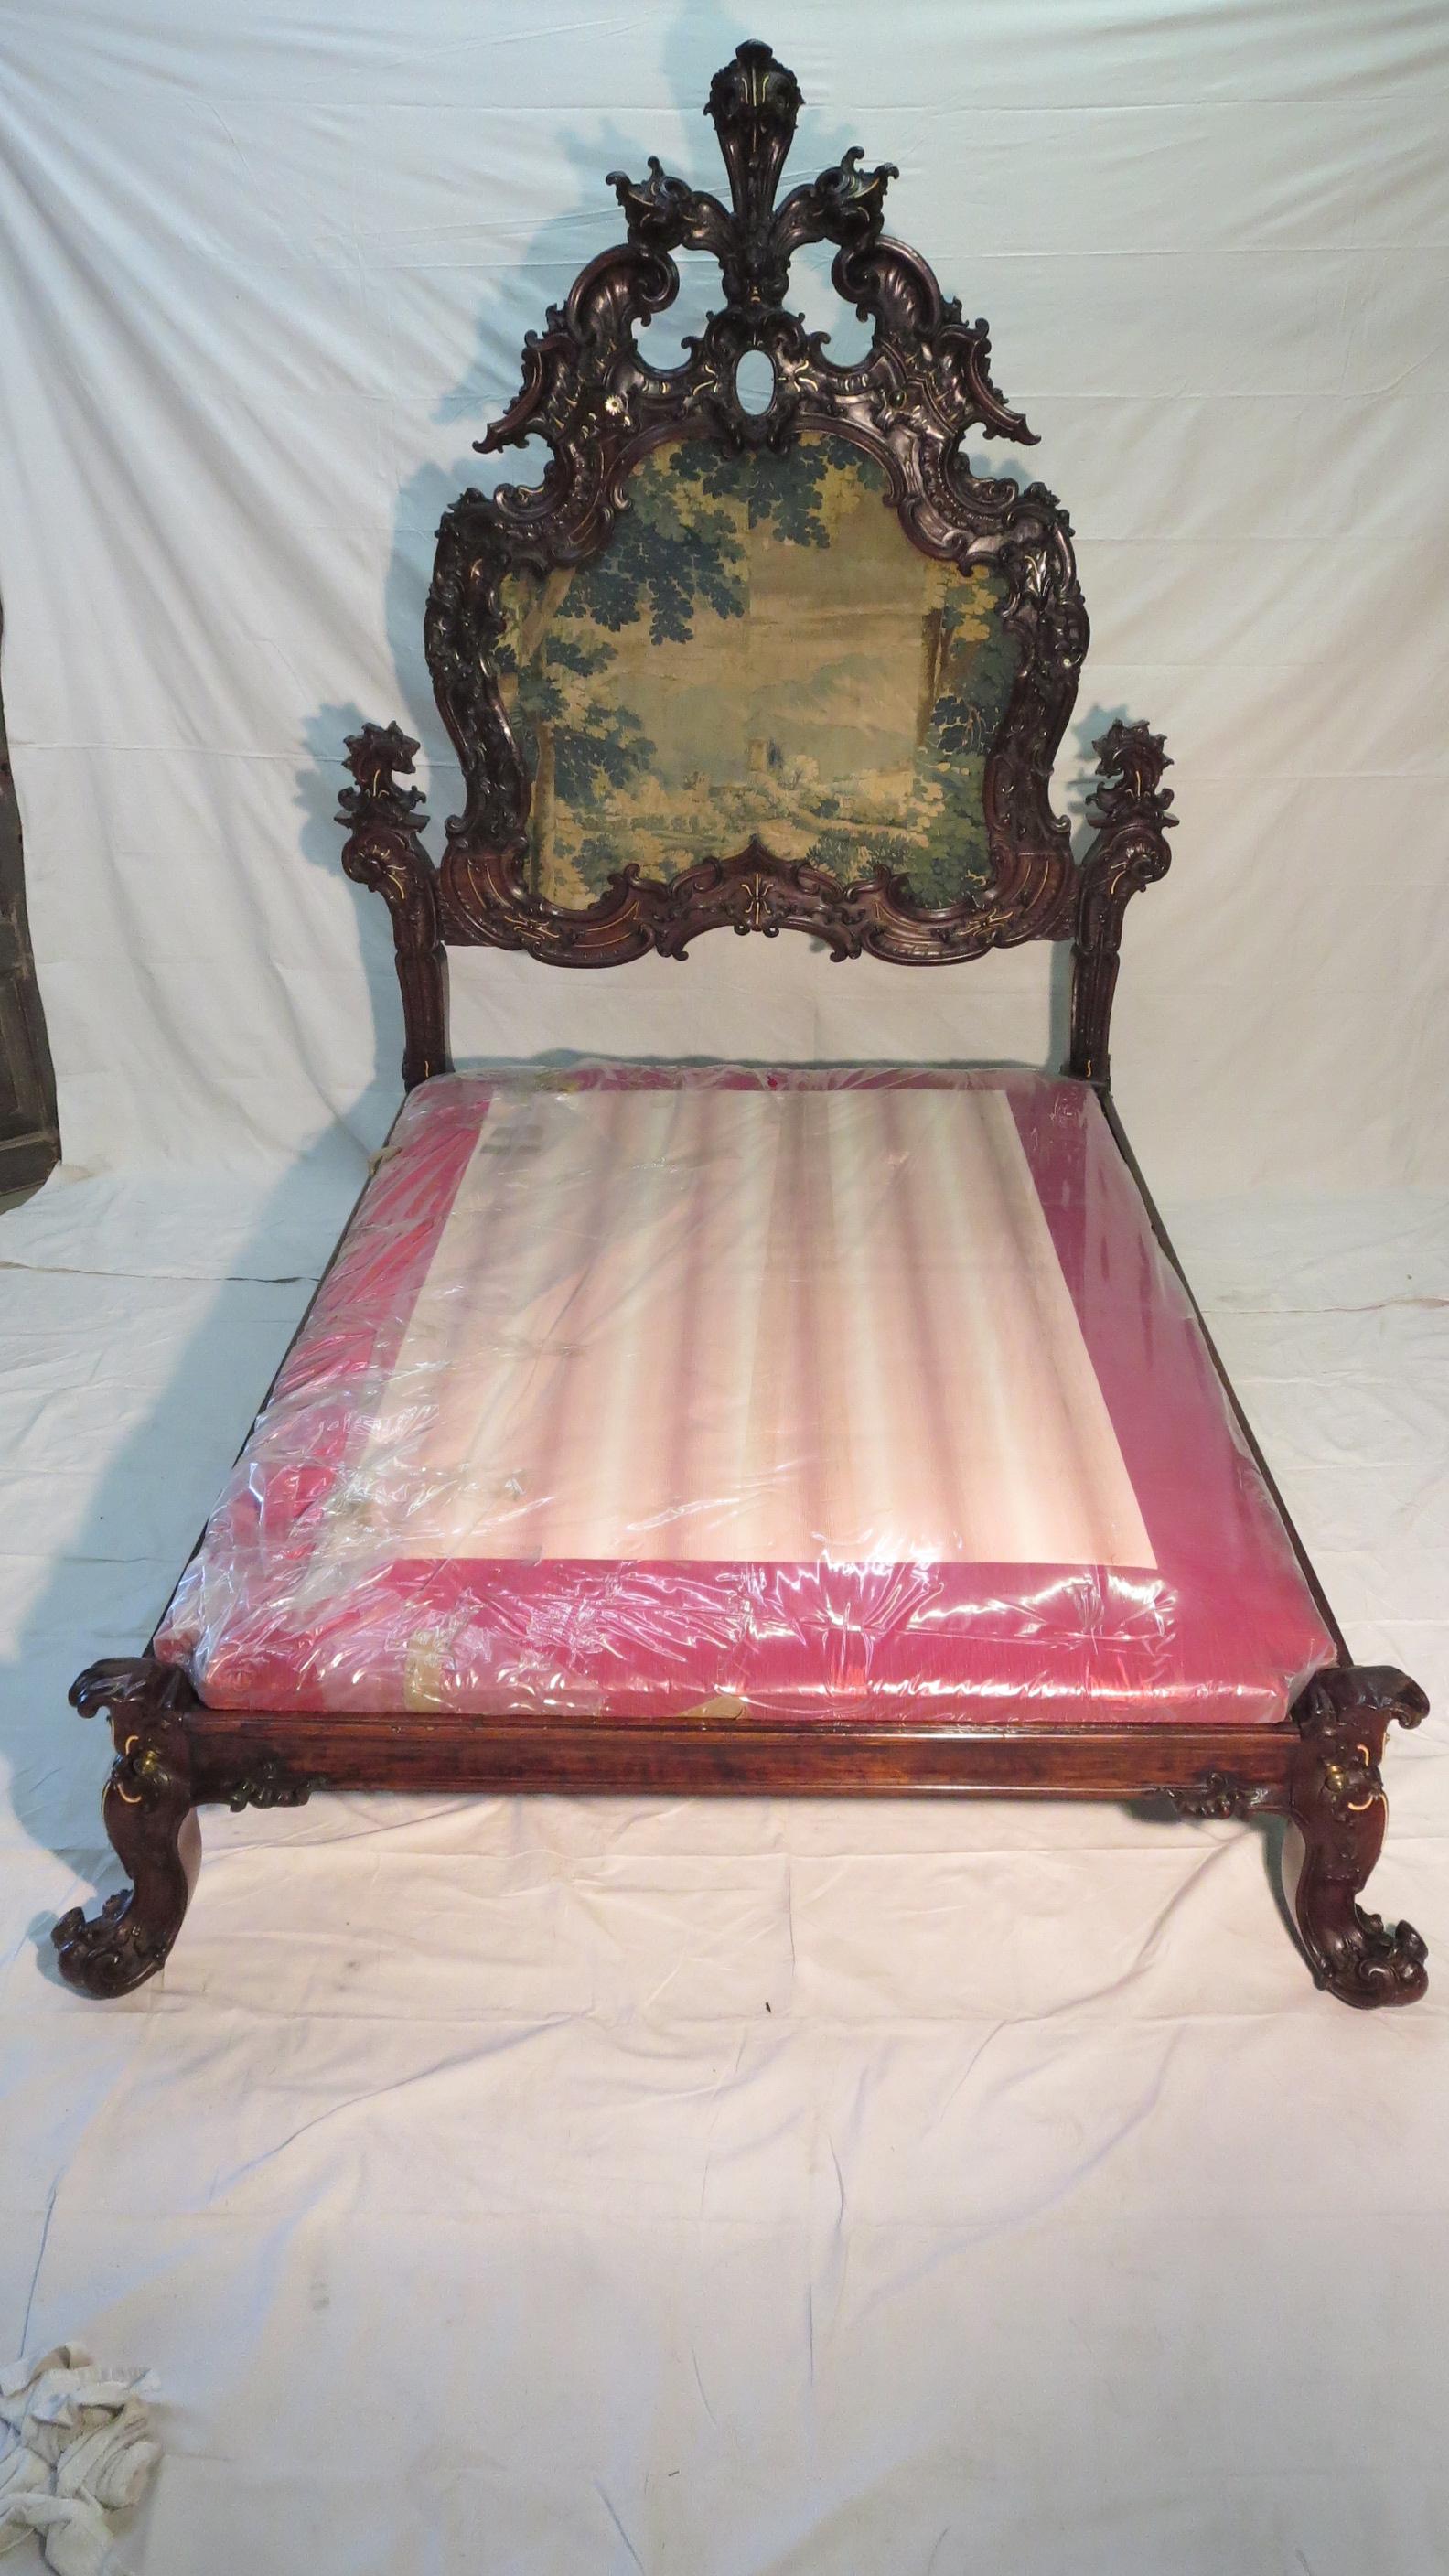 Rare Sculpted Colonial Portuguese 17th/18th C. Jacaranda King Bed Antique LA CA For Sale 7